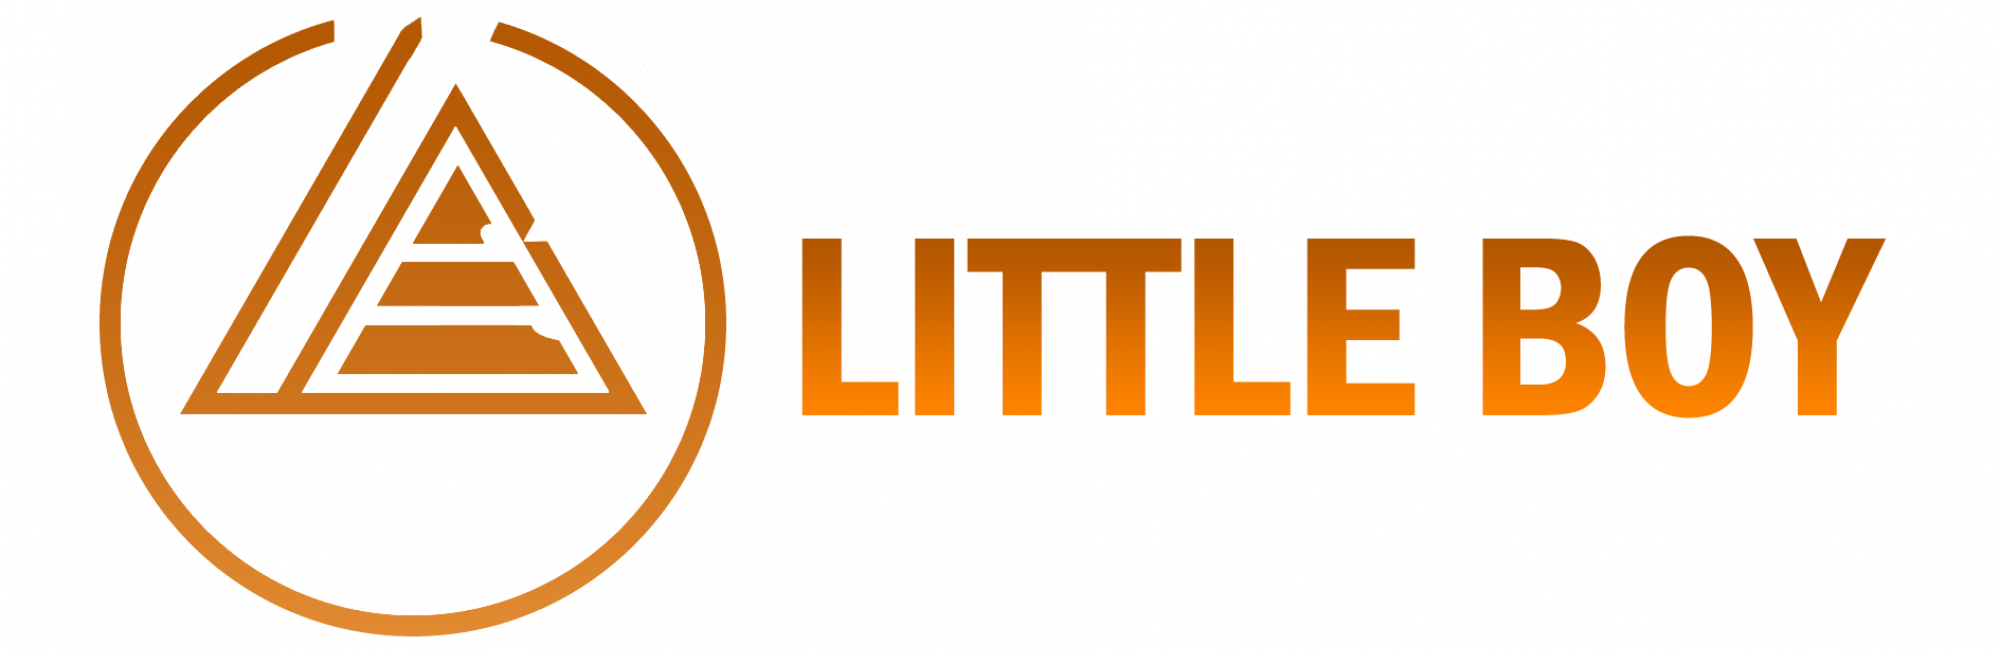 LittleBoy